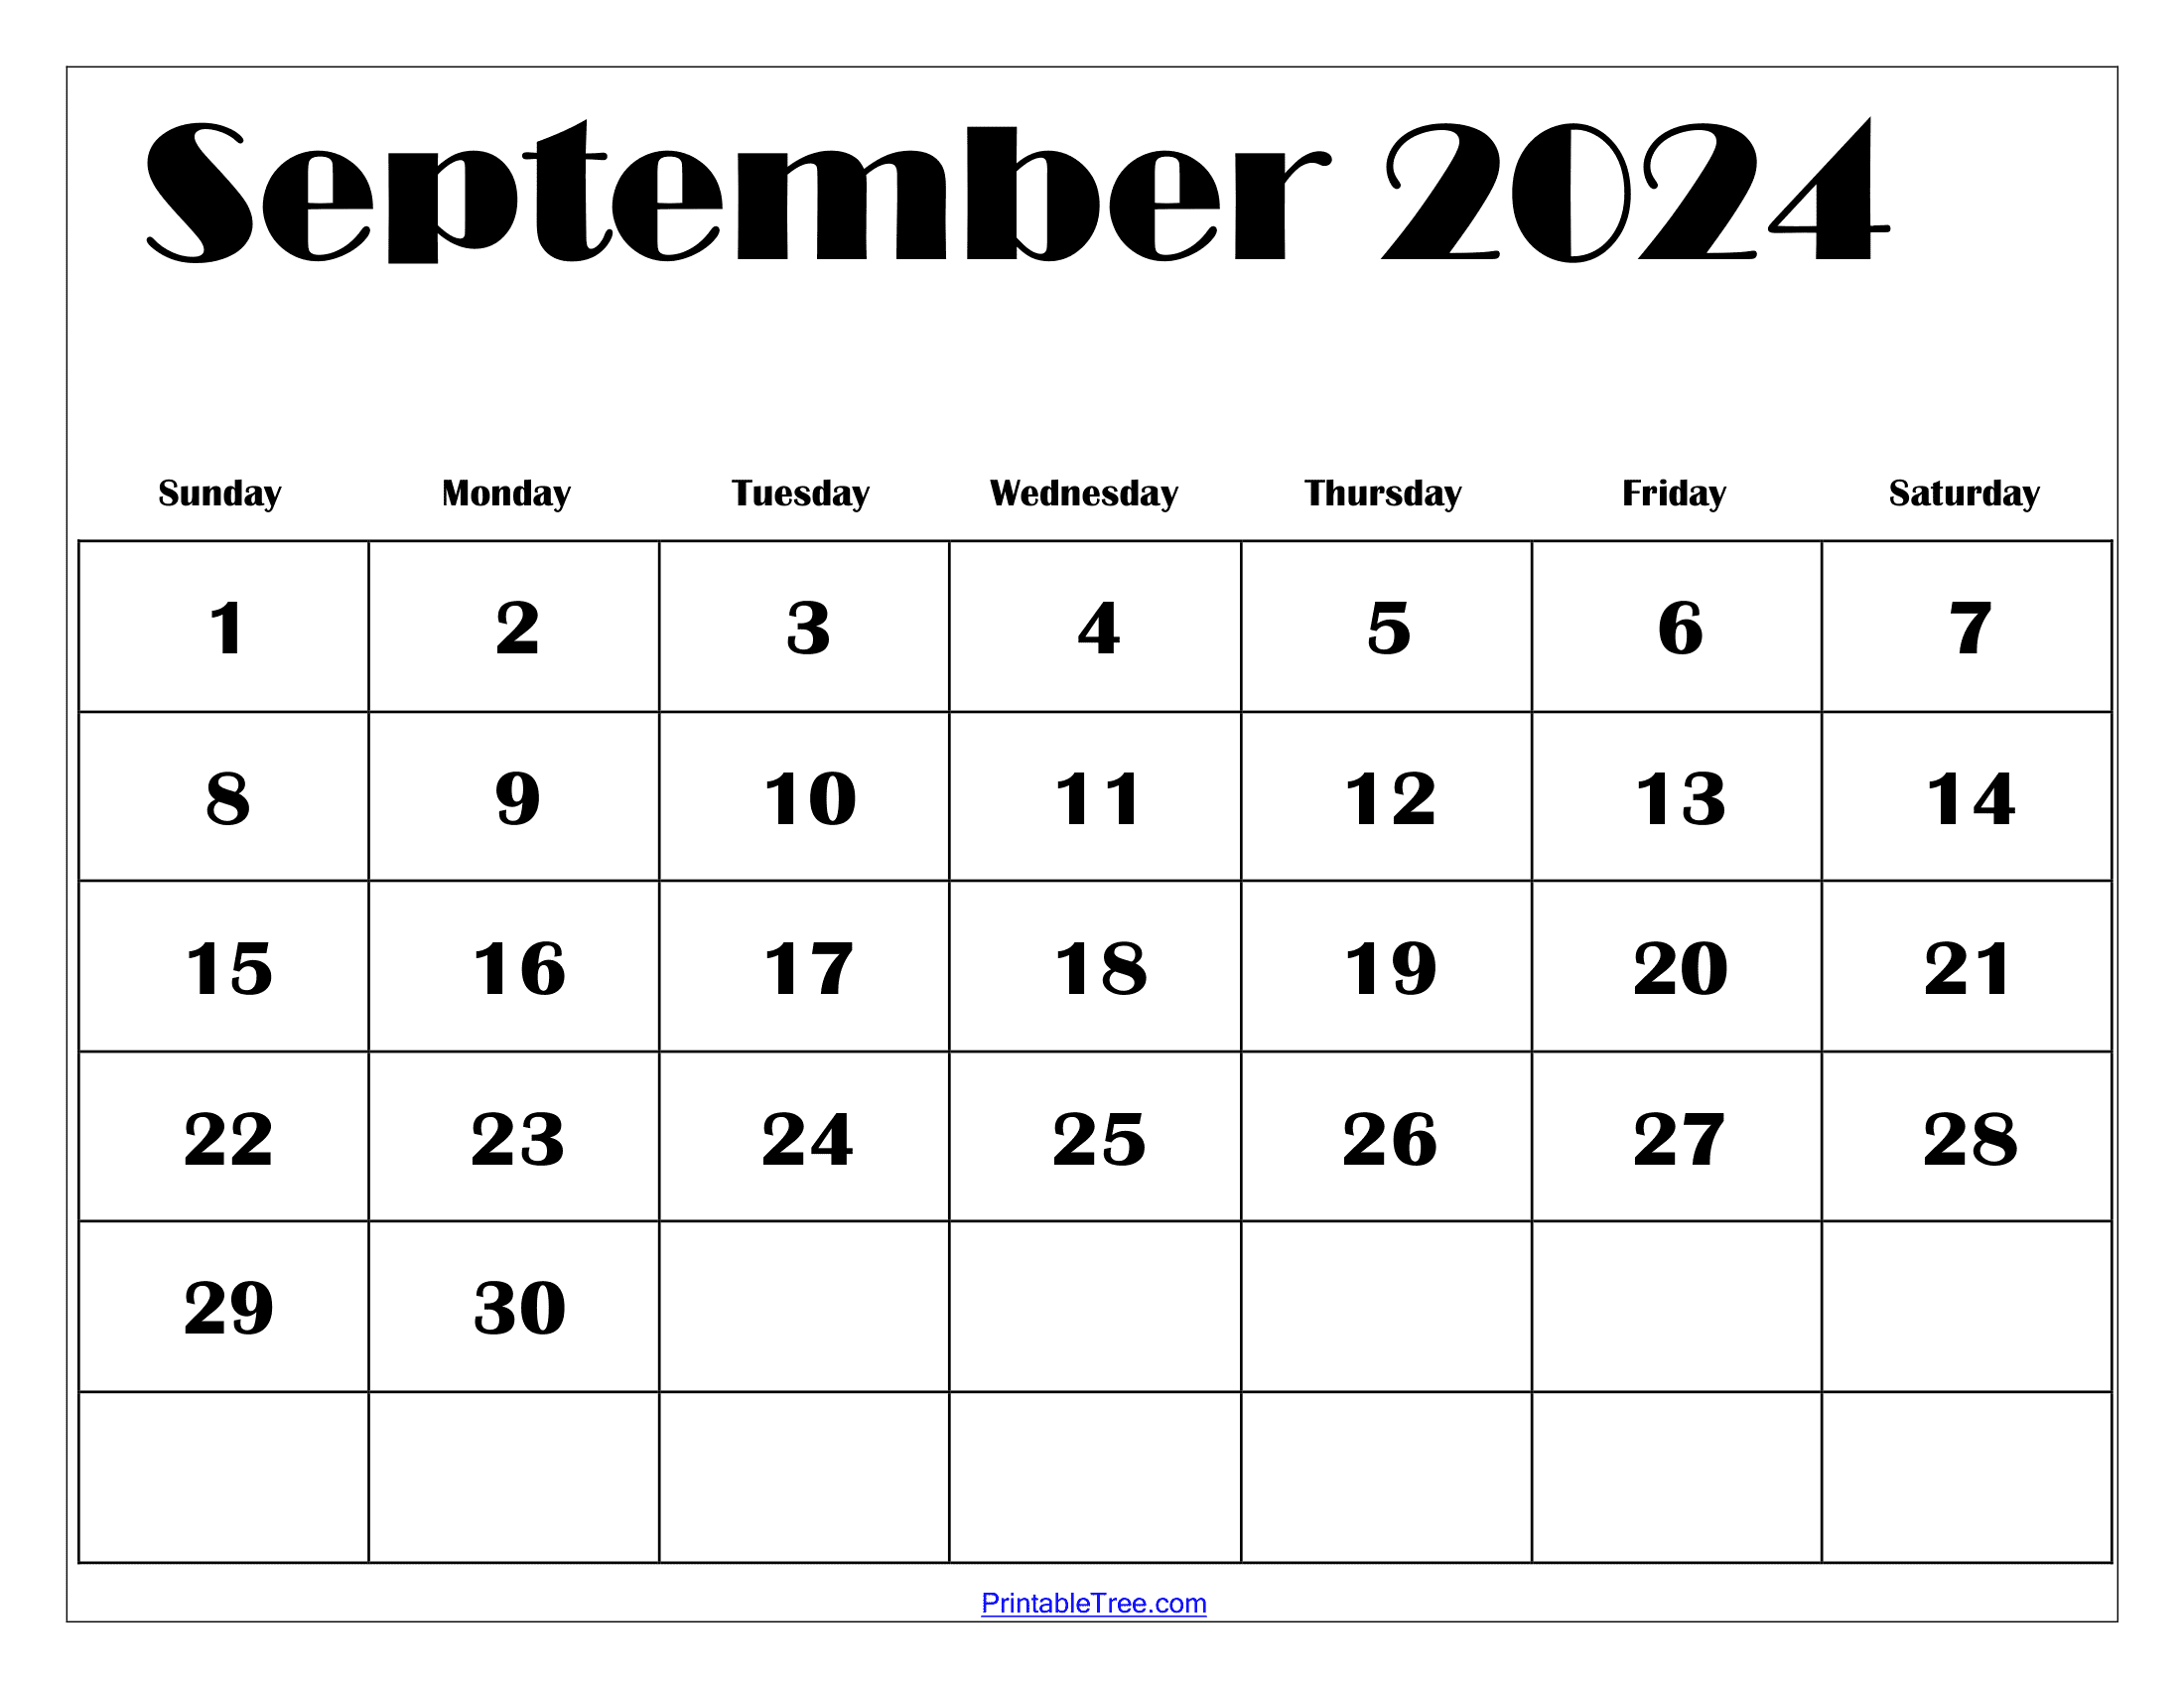 September 2024 Calendar Printable Pdf With Holidays for September 2024 Calendar With Holidays Printable